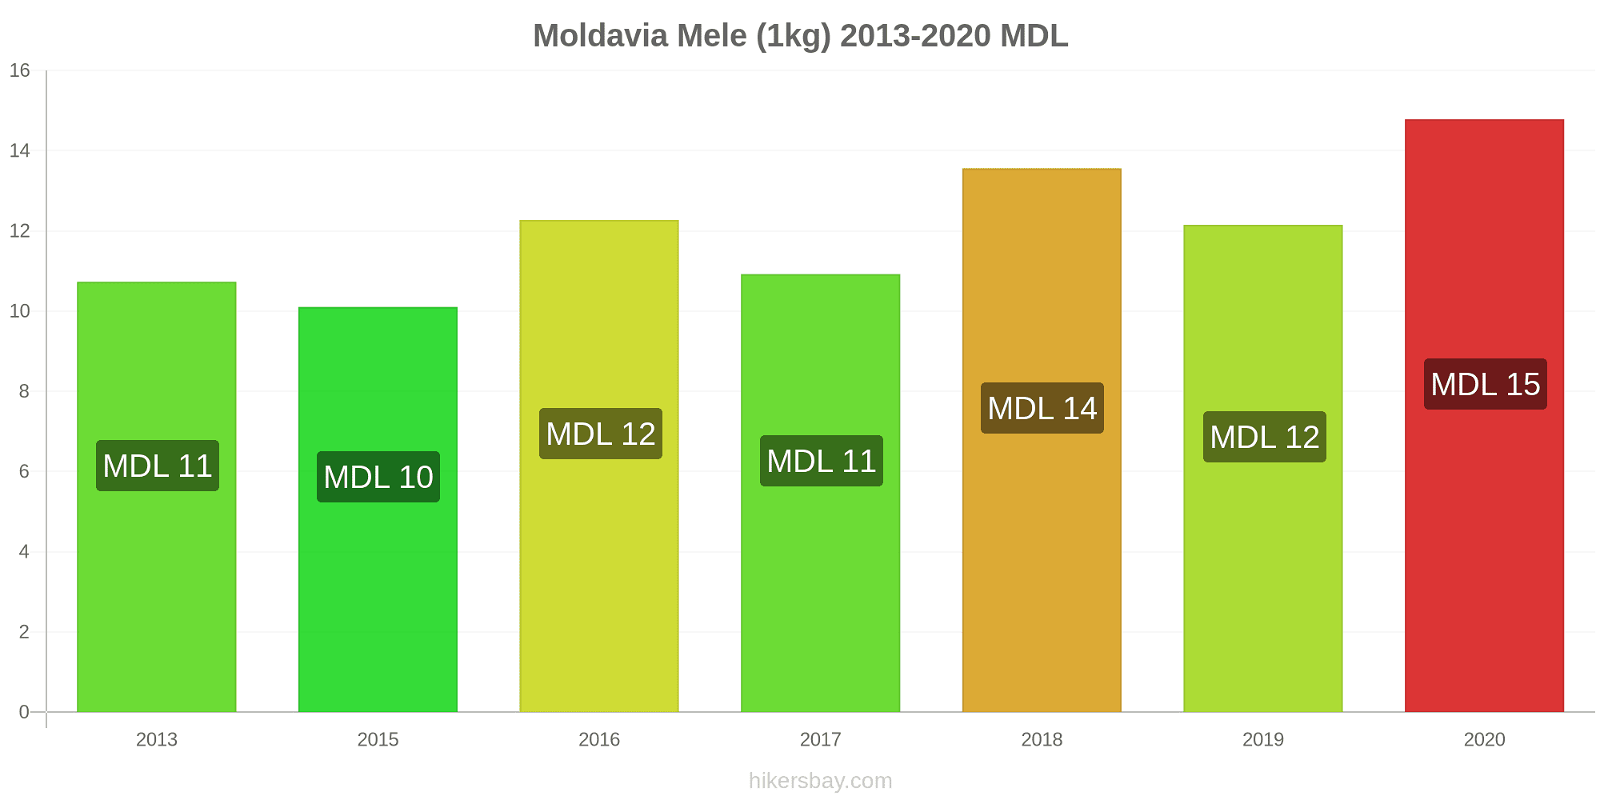 Moldavia variazioni di prezzo Mele (1kg) hikersbay.com